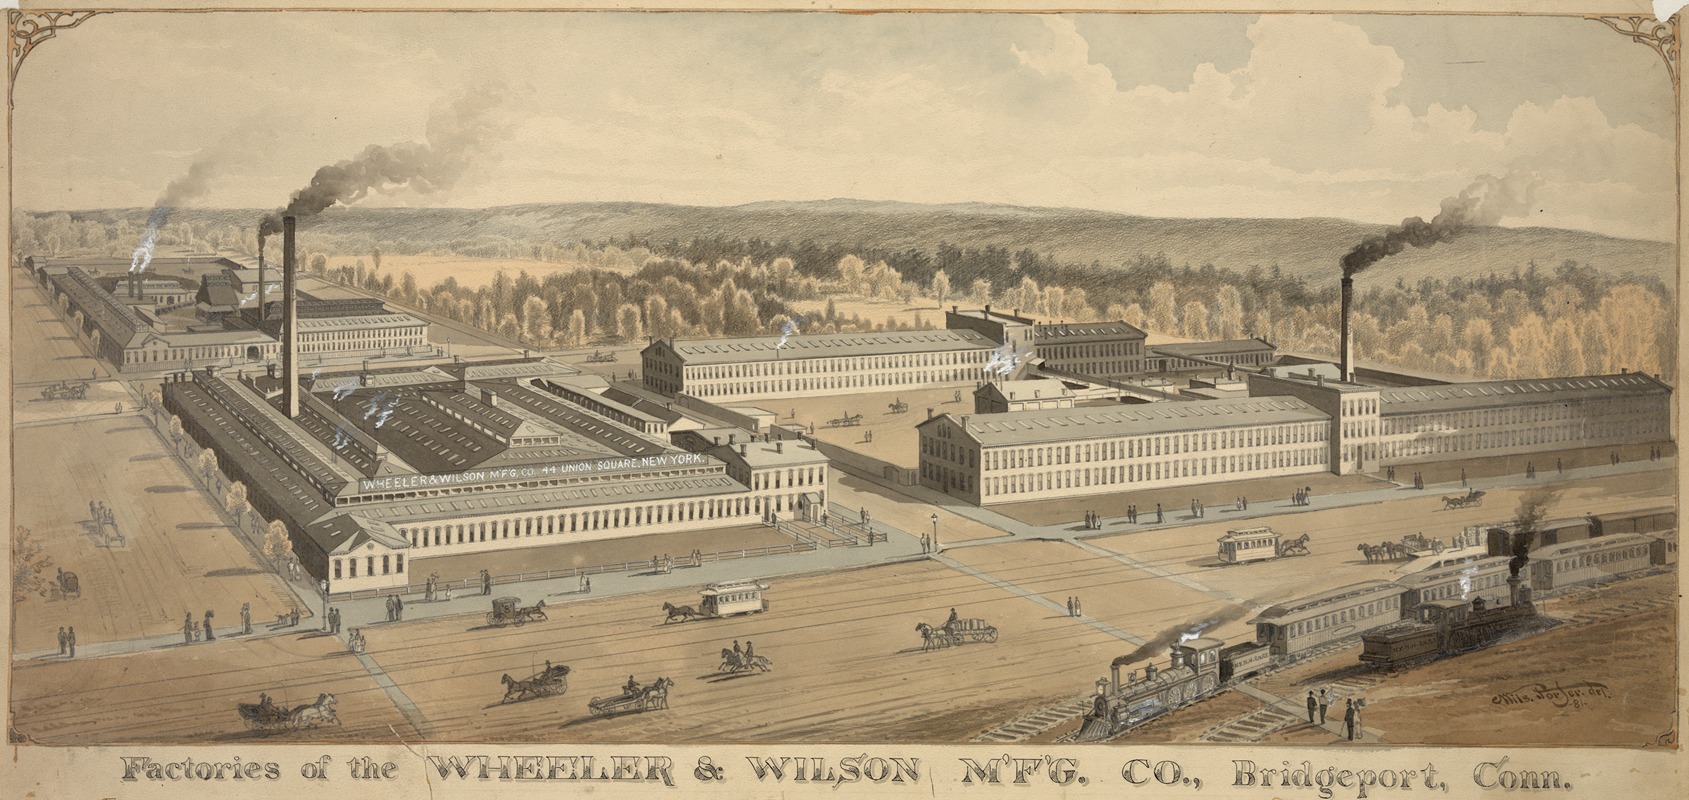 William Arnold Porter - Factories of the Wheeler & Wilson M’F’G. Co., Bridgeport, Conn.